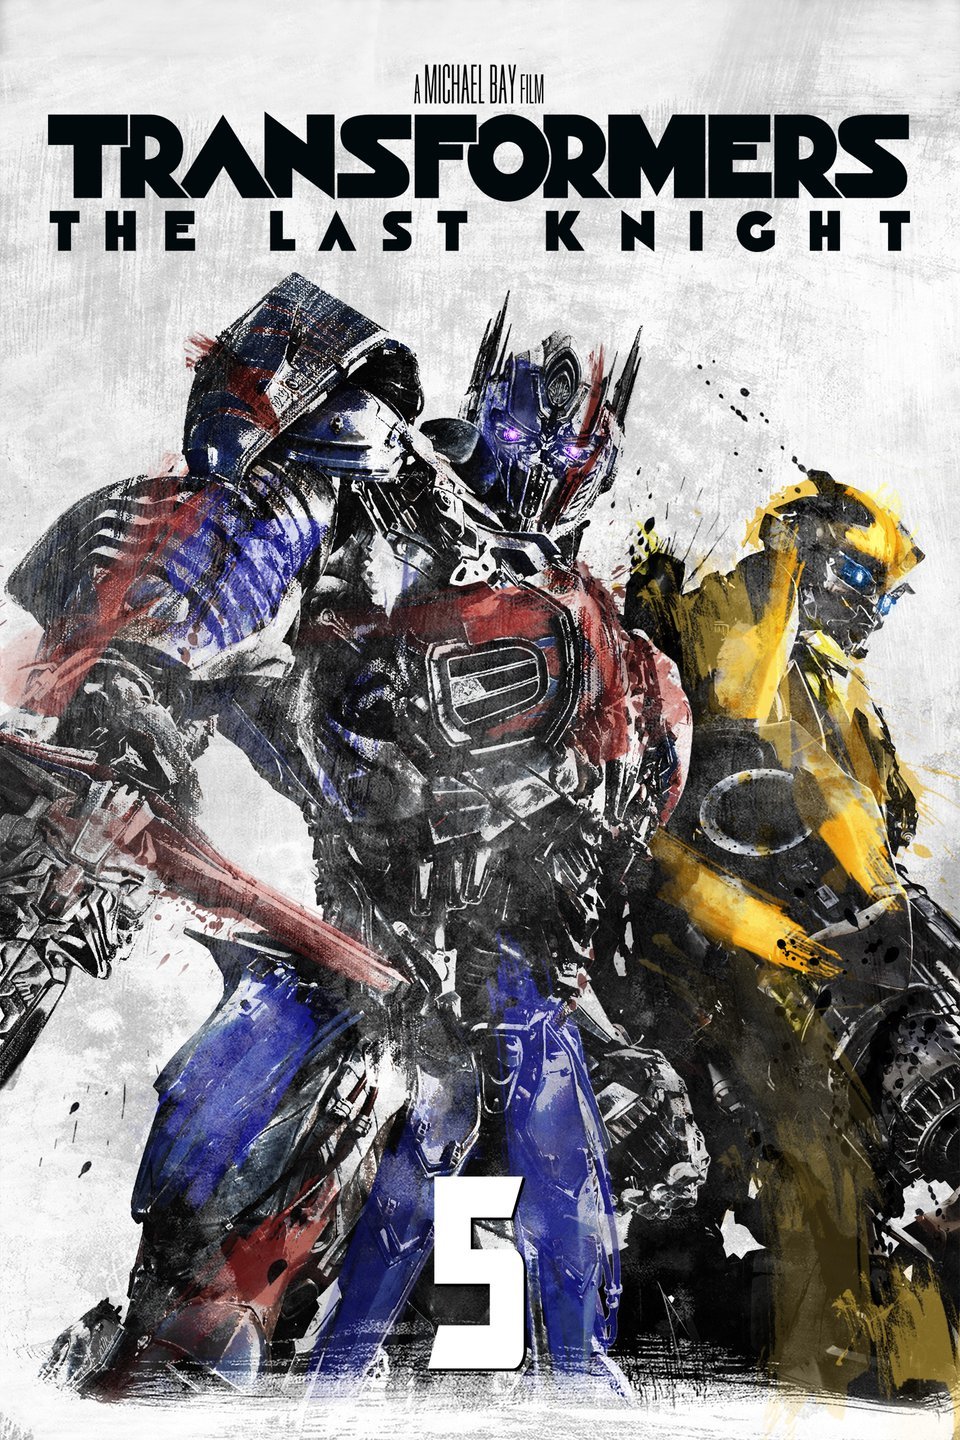 [MINI Super-HQ] Transformers: The Last Knight (2017) IMAX Edition ทรานส์ฟอร์เมอร์ส 5 อัศวินรุ่นสุดท้าย [1080P] [พากย์ไทย DTS + เสียงอังกฤษ DTS] [BrRip.DTS.x264] [บรรยายไทย + อังกฤษ] [เสียงไทย + ซับไทย] [OPENLOAD]